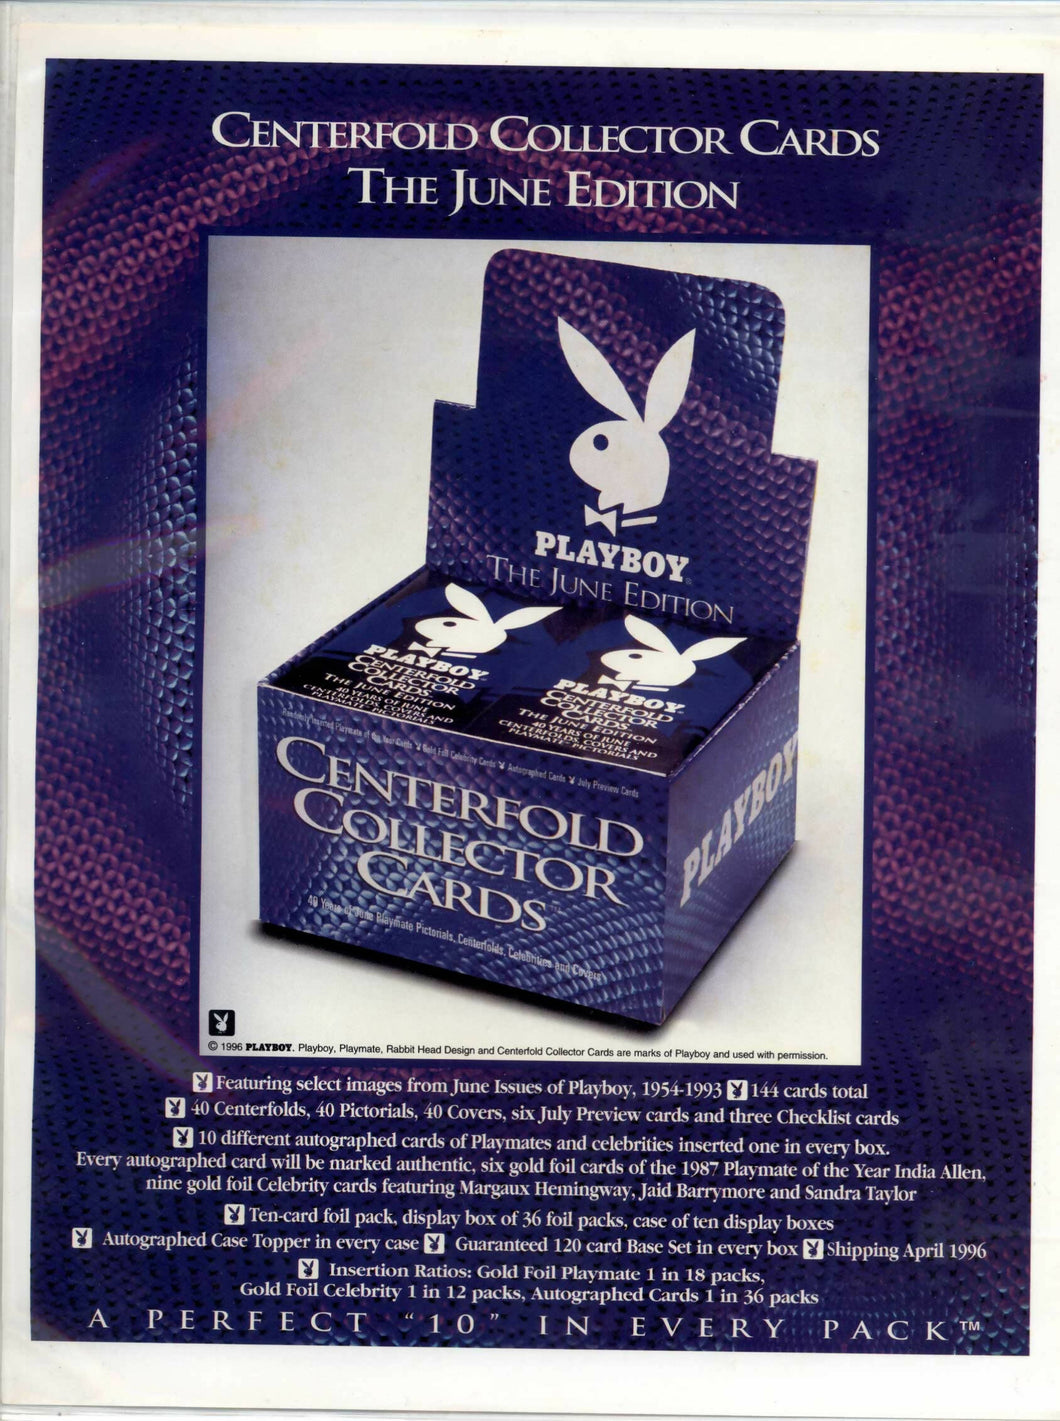 Playboy - June Edition sell sheet [8.5